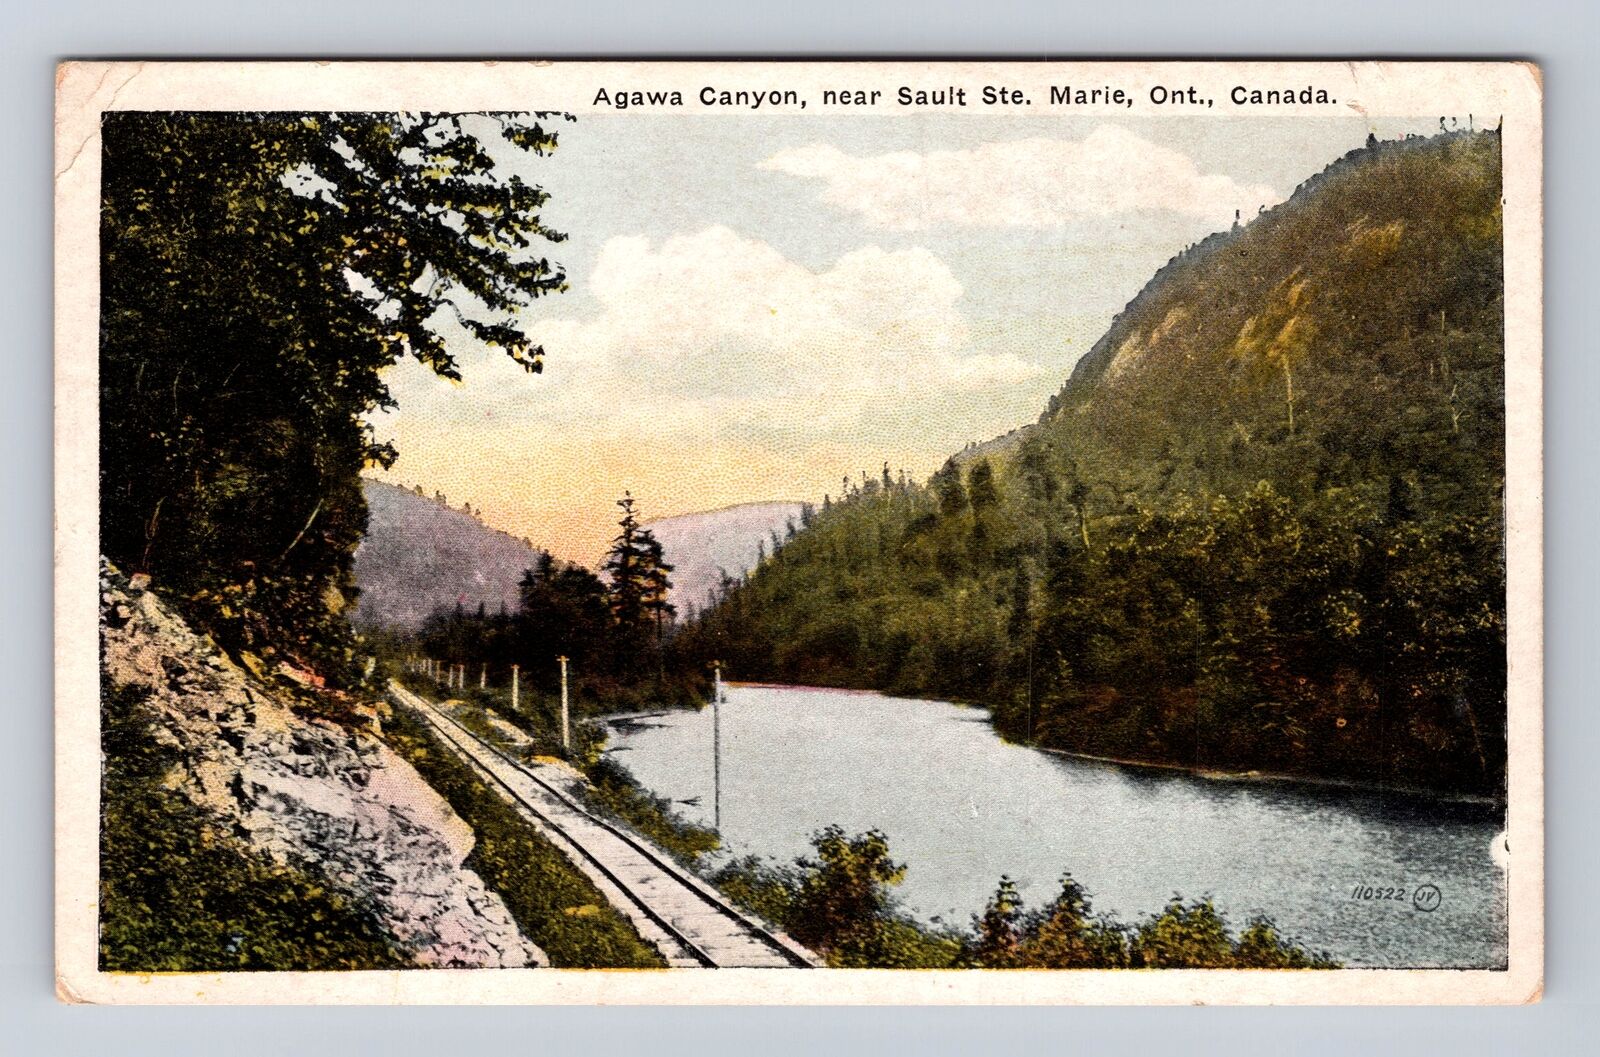 Sault Ste Marie Ontario Canada, Scenic Agawa Canyon, Railroad, Vintage Postcard